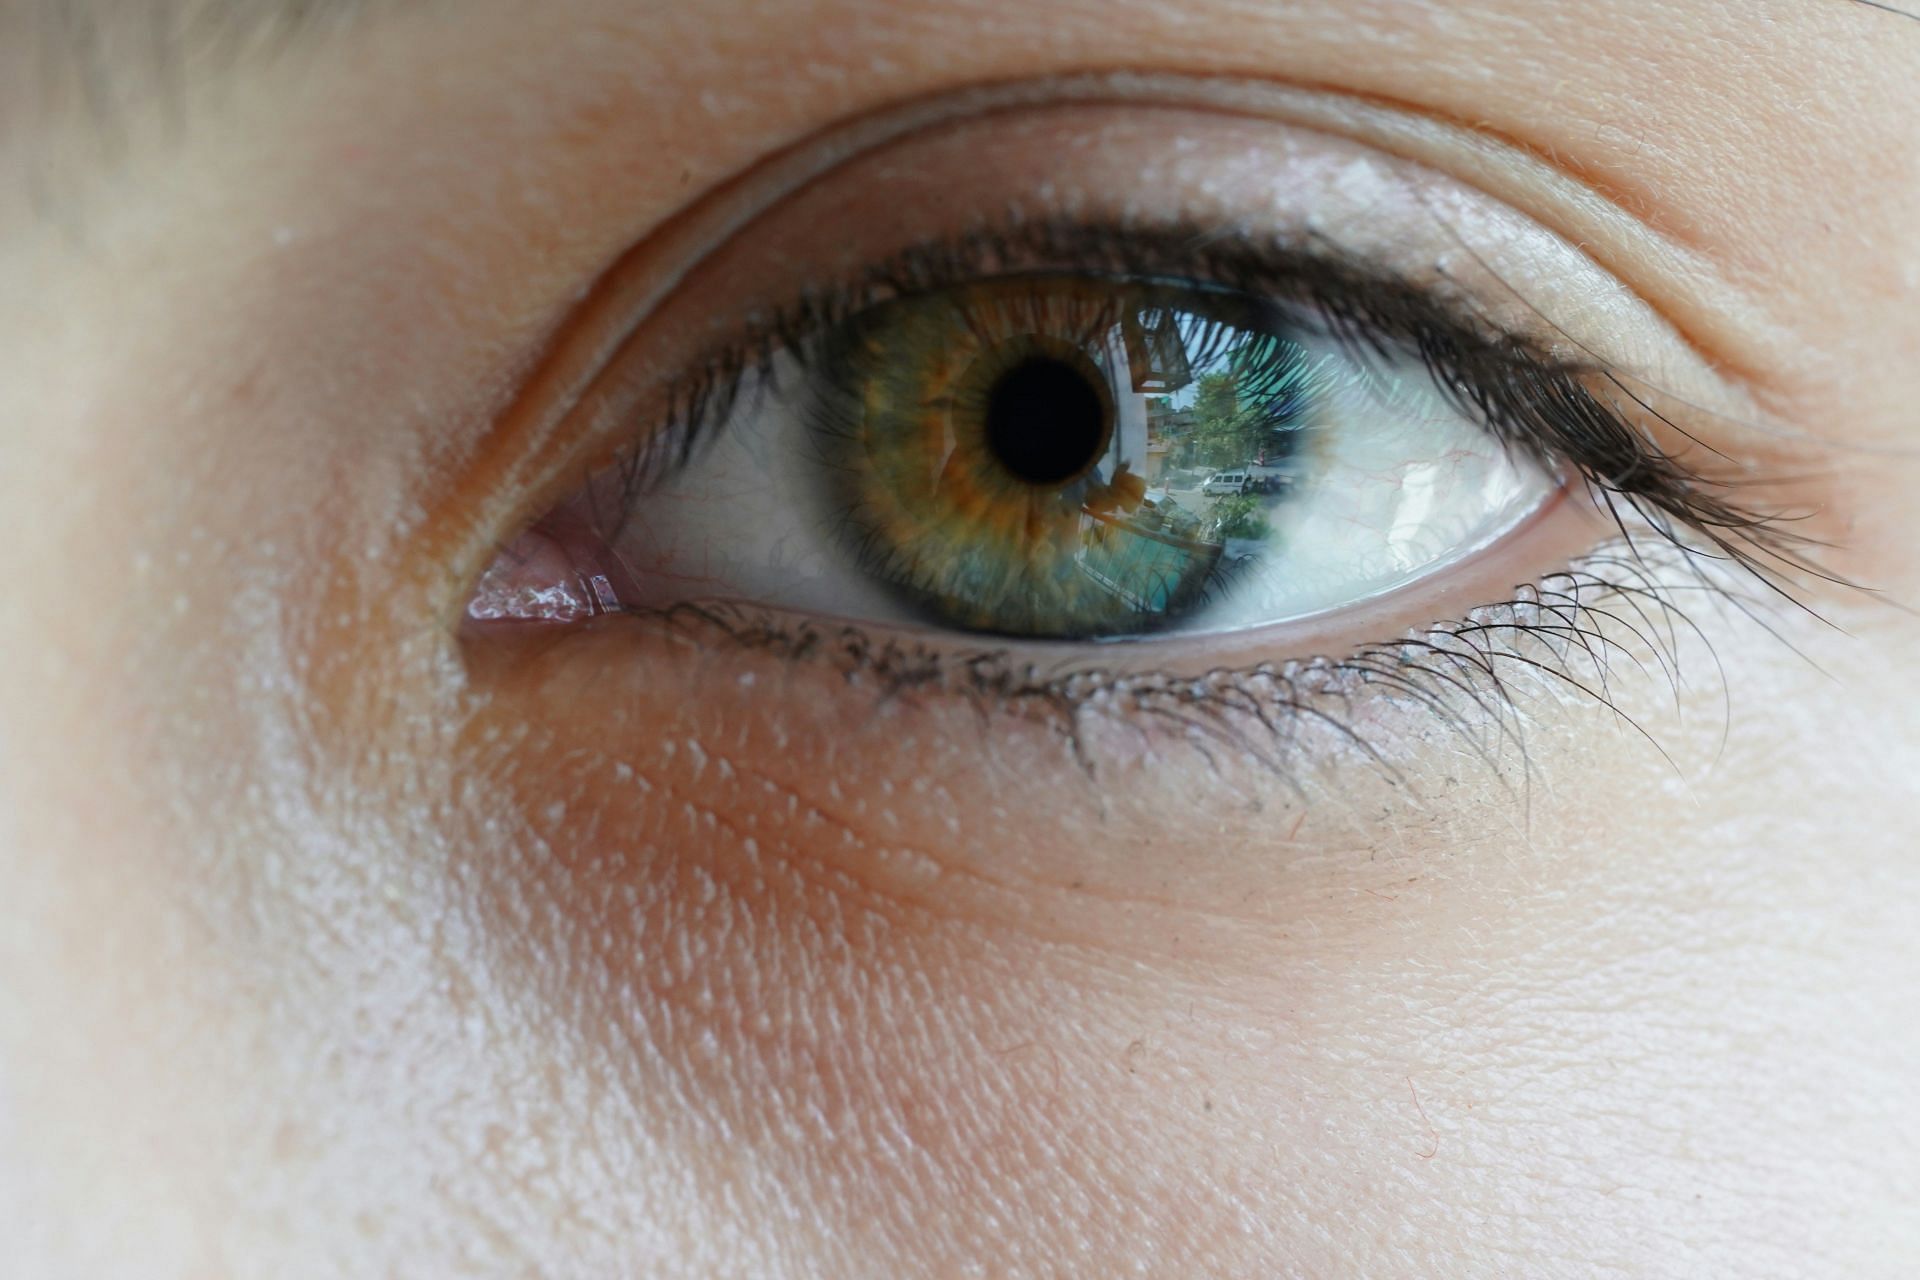 UV rays can cause retinal damage. (Image by Pranav Kumar/Unsplash)